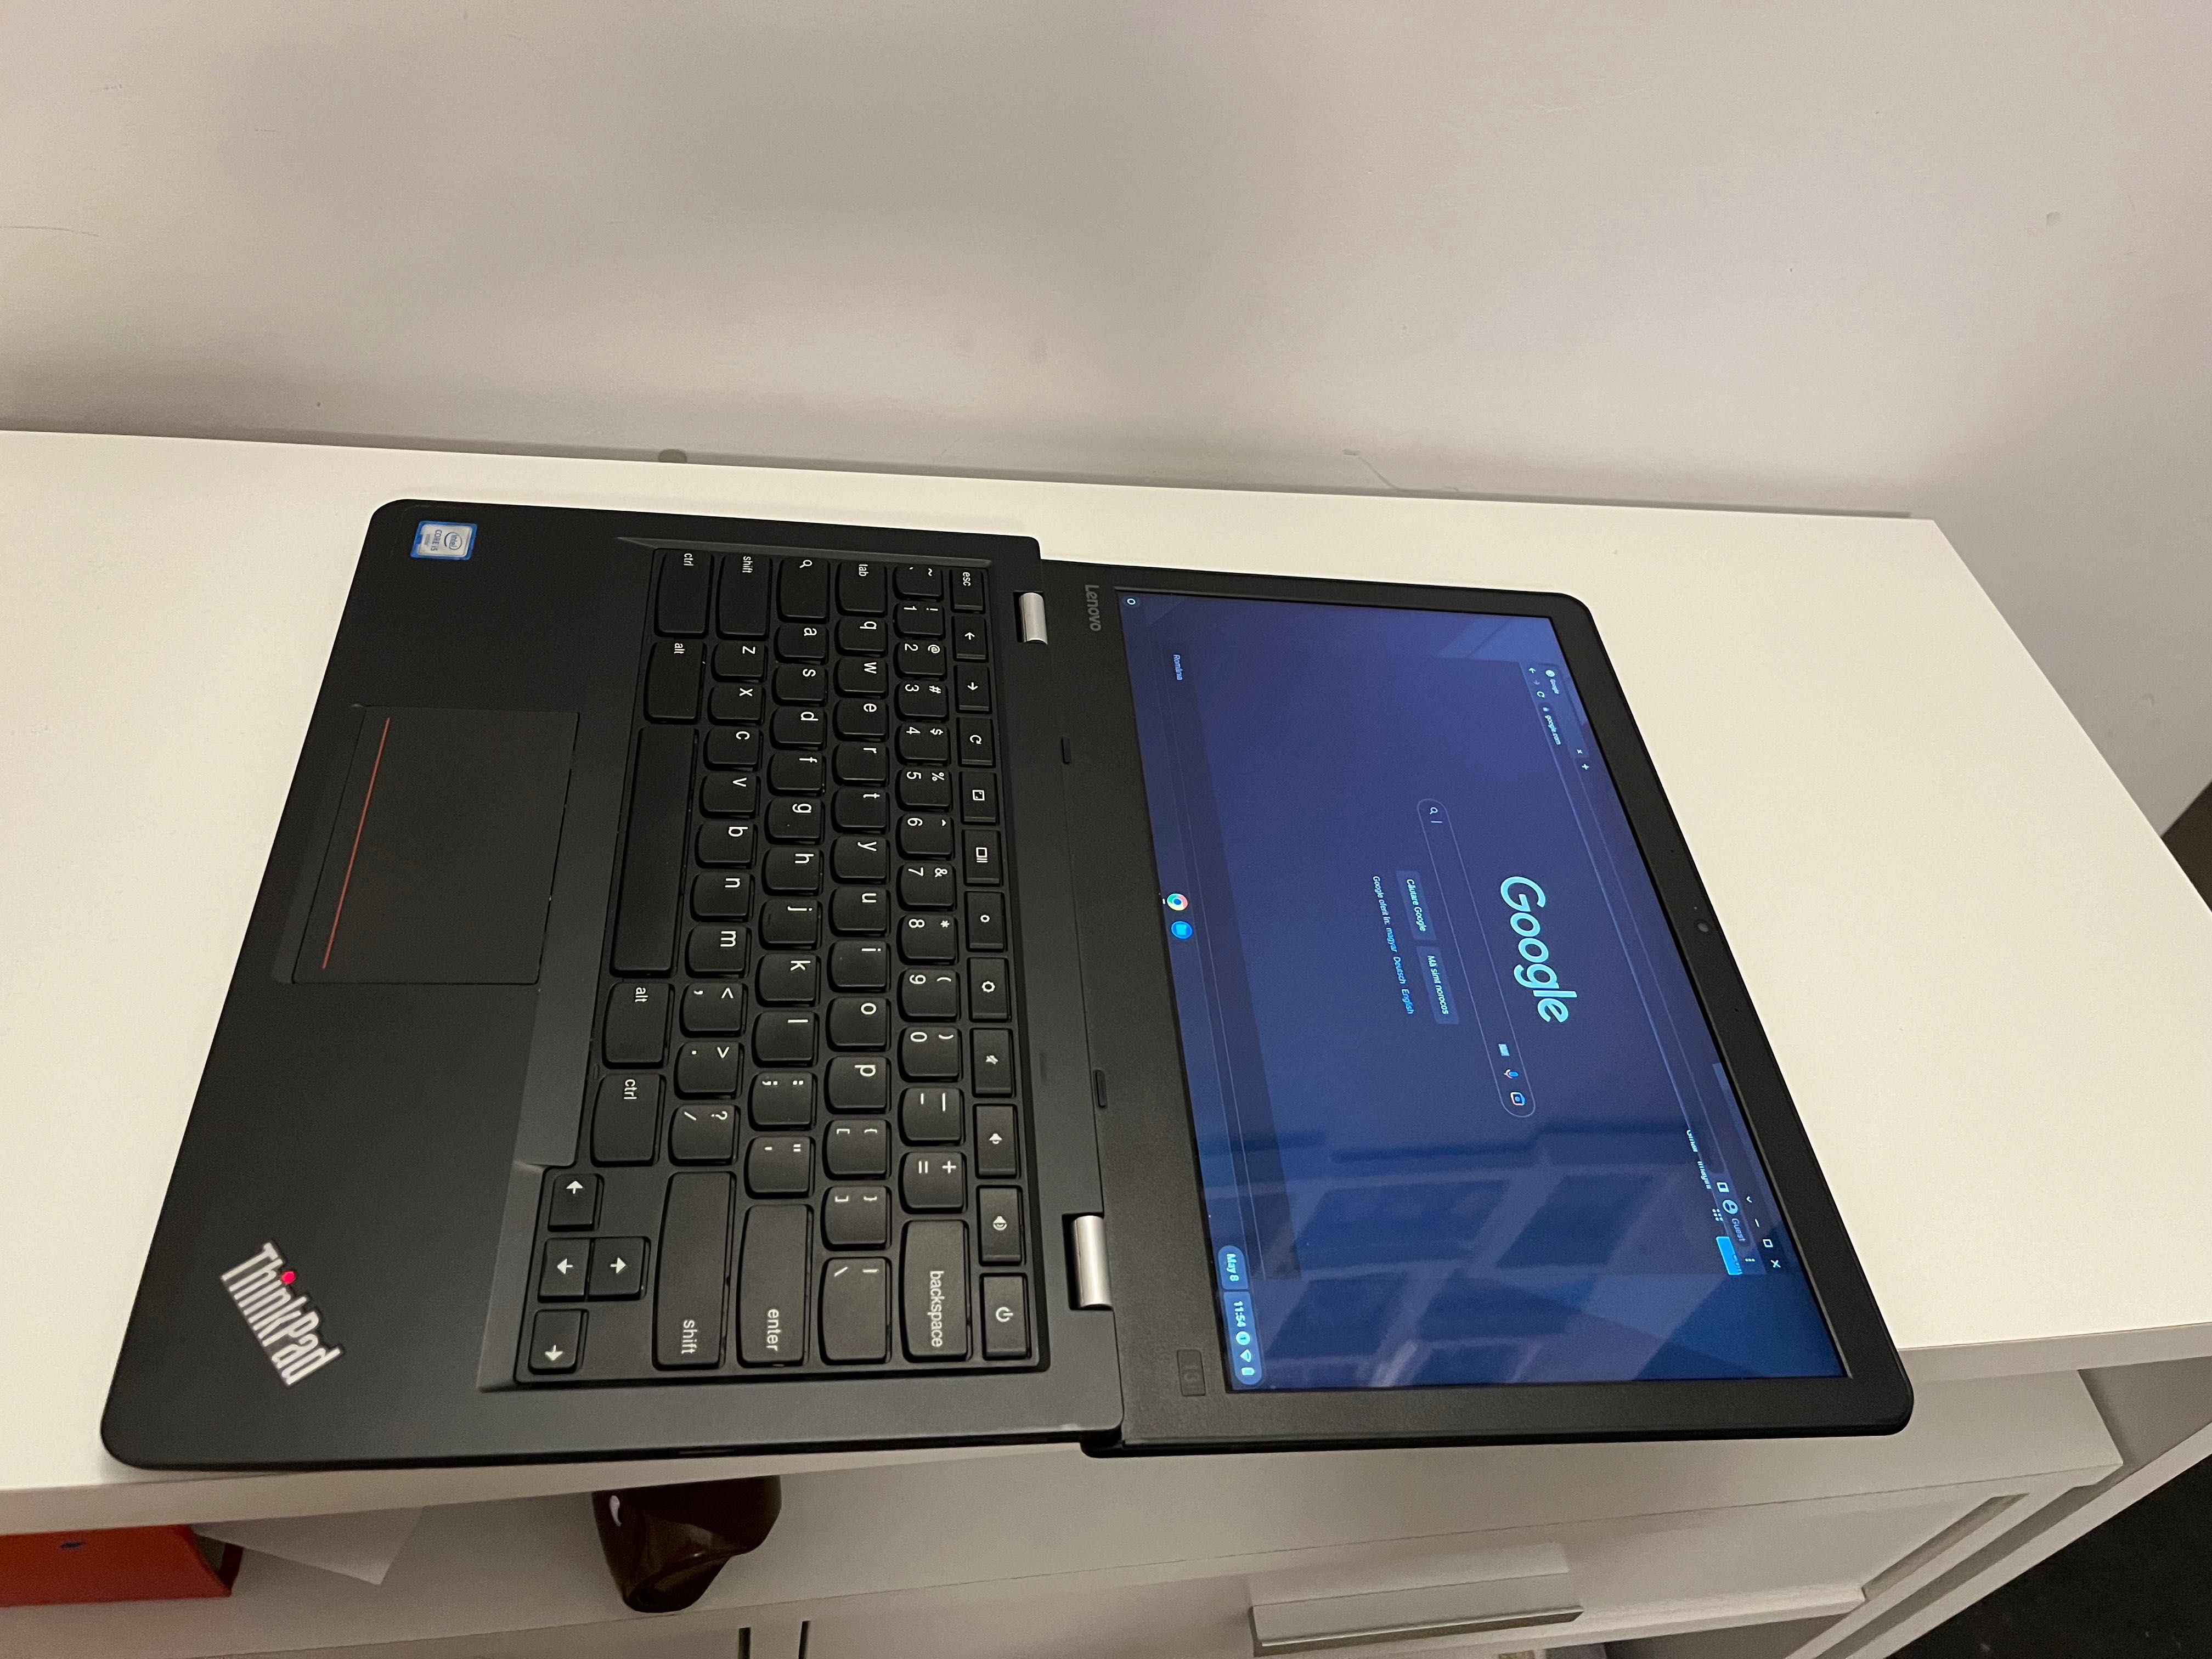 Lenovo Thinkpad , Chromebook